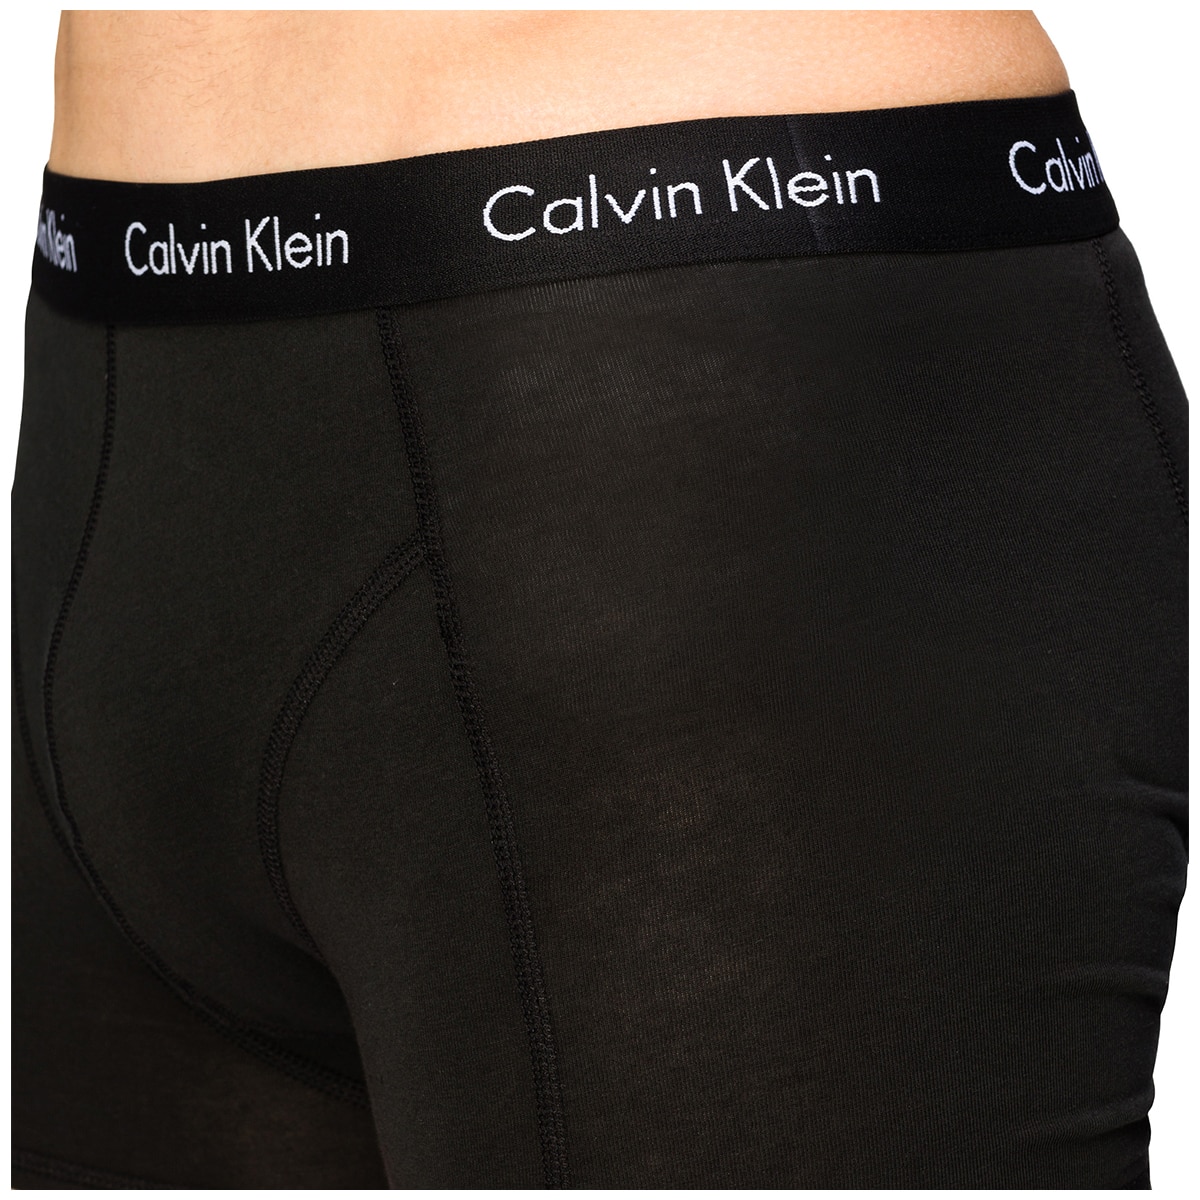 Calvin Klein Men's Trunks 3pk Medium | Costco Australia